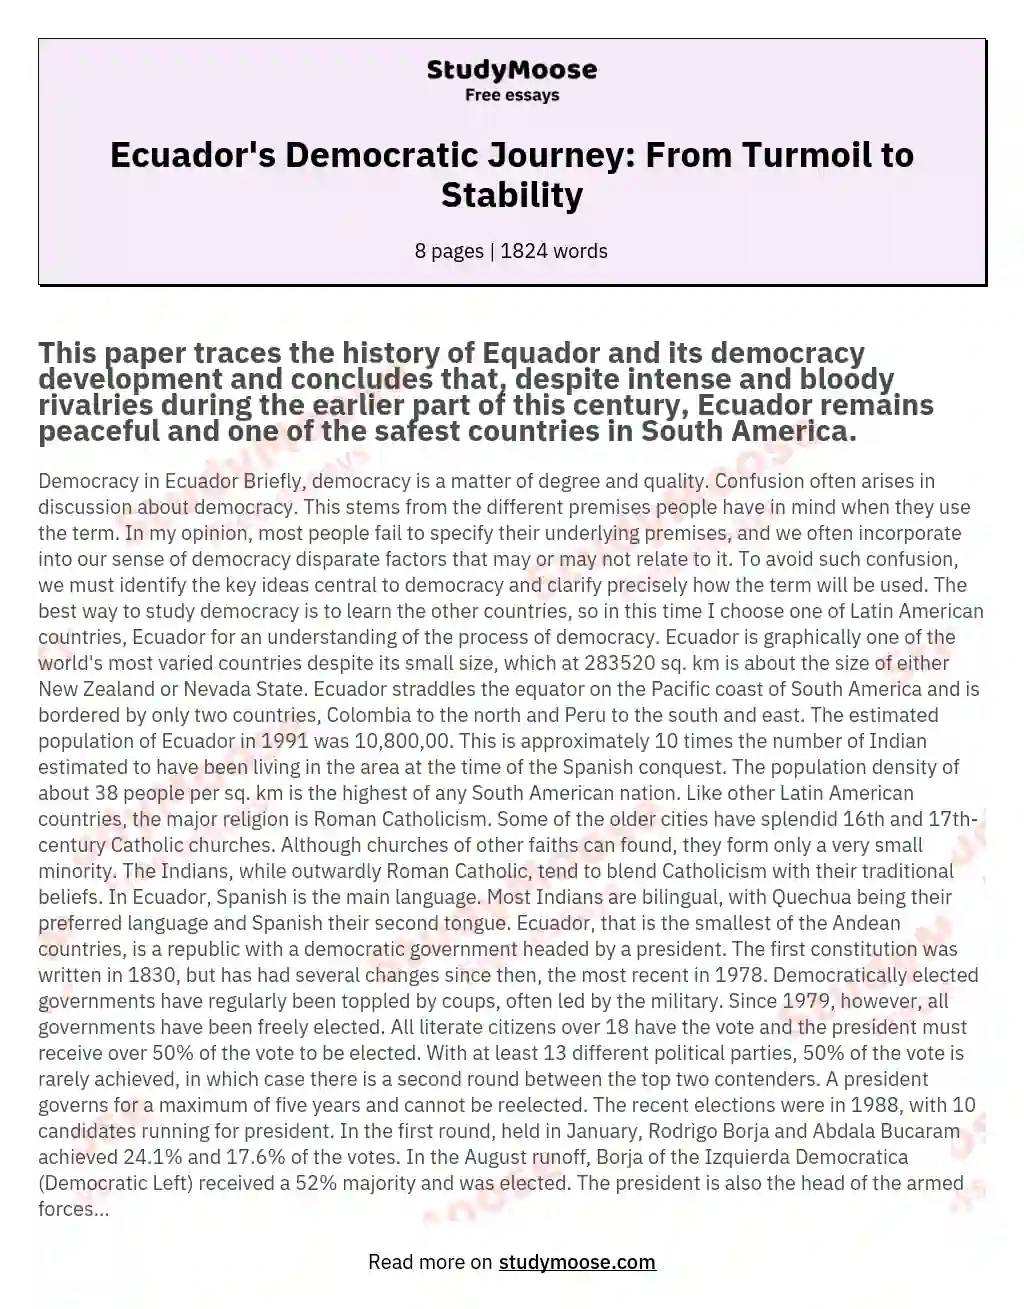 Ecuador's Democratic Journey: From Turmoil to Stability essay